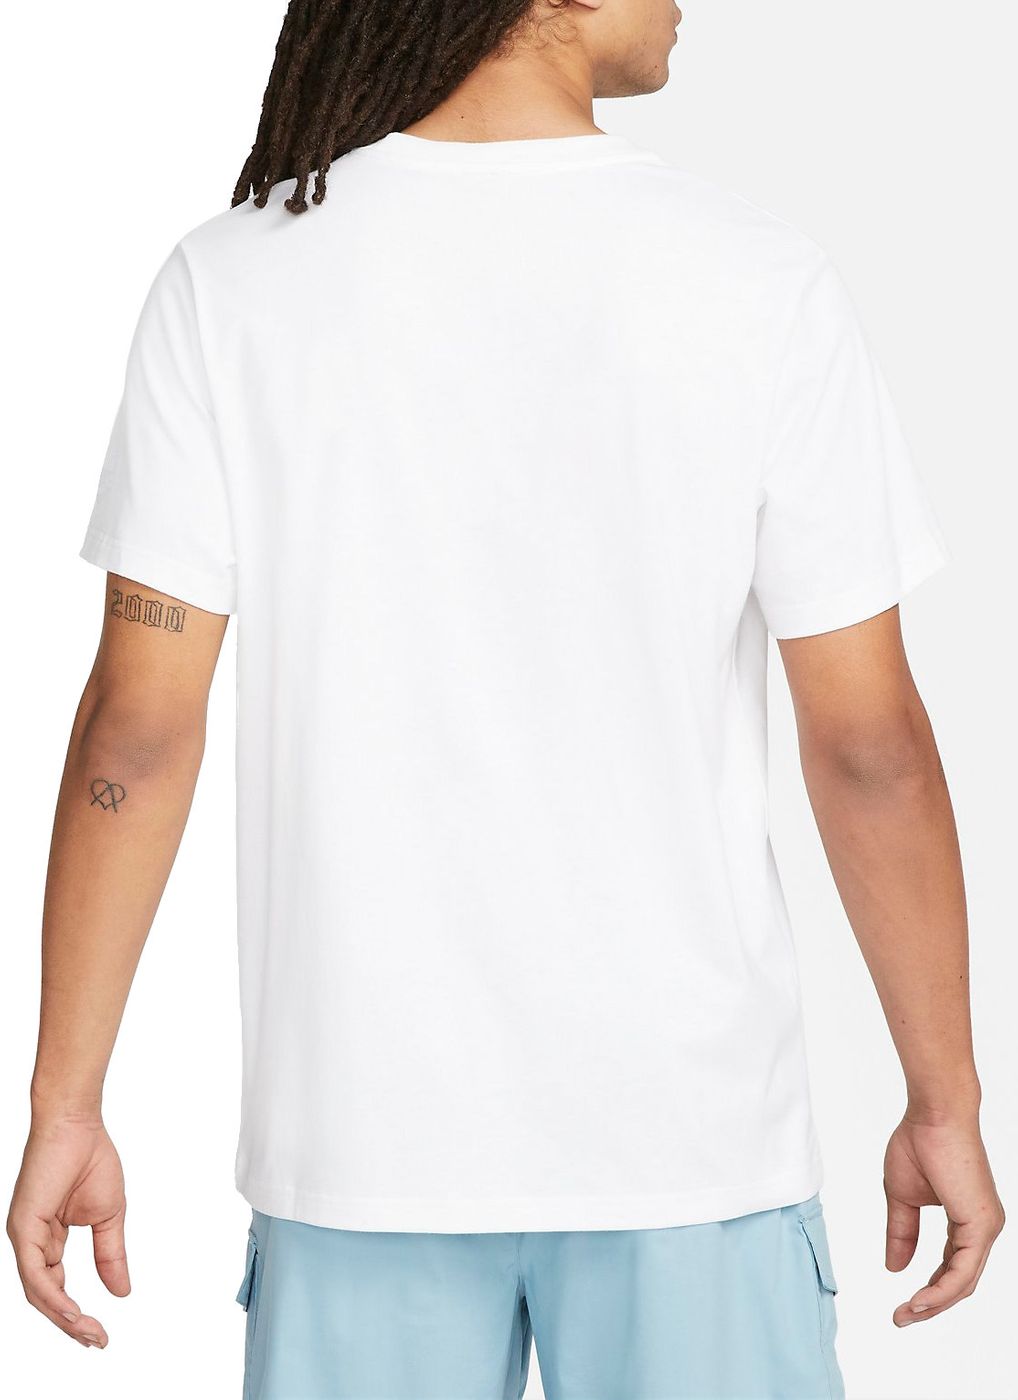 Sportswear T-Shirt - Nike